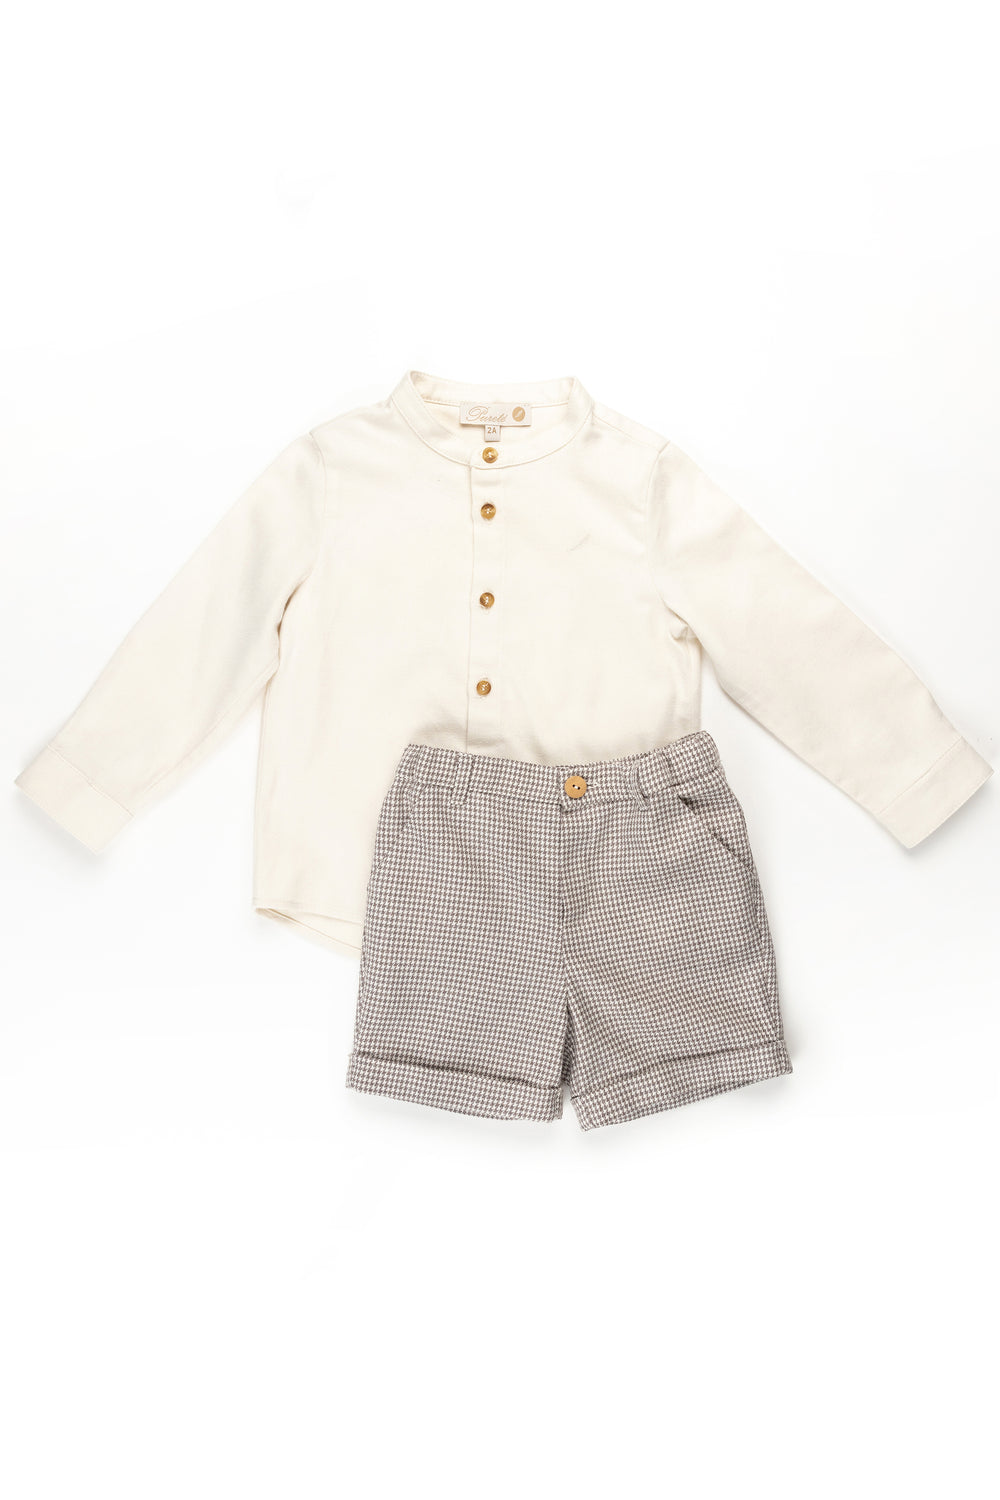 Pureté du Bebe "Lennox" Shirt & Brown Houndstooth Shorts | Millie and John